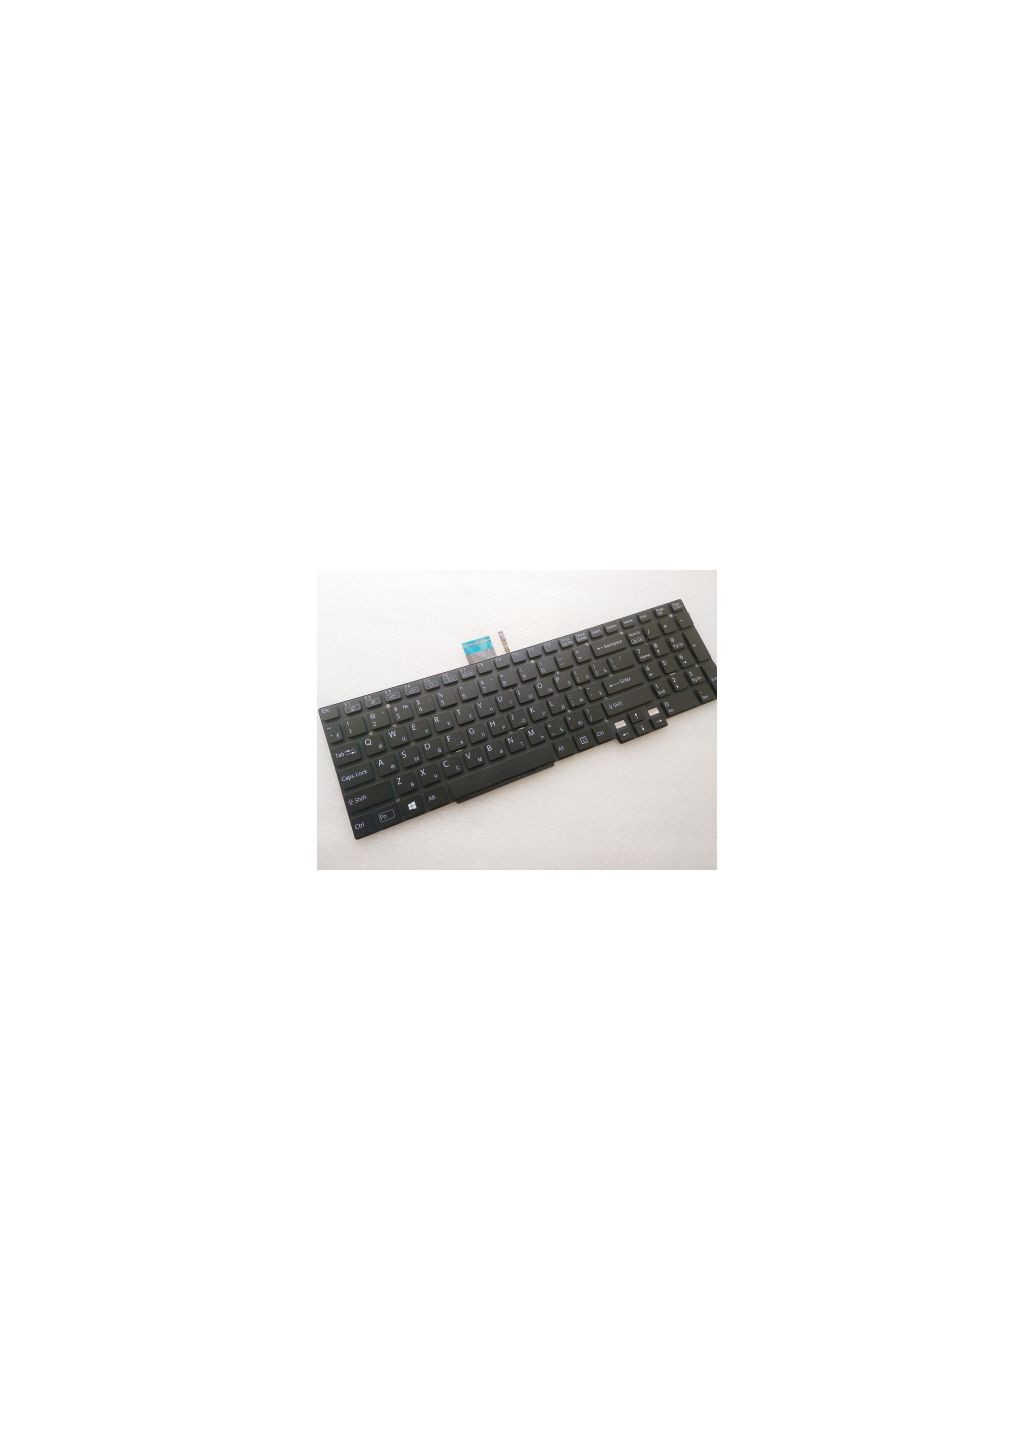 Клавиатура ноутбука Vaio SVT15 (Tab 15) black,wo/frame,frame,backlight RU/US (A46049) Sony vaio svt15 (tab 15) black, wo/frame, frame, backlight (276707408)